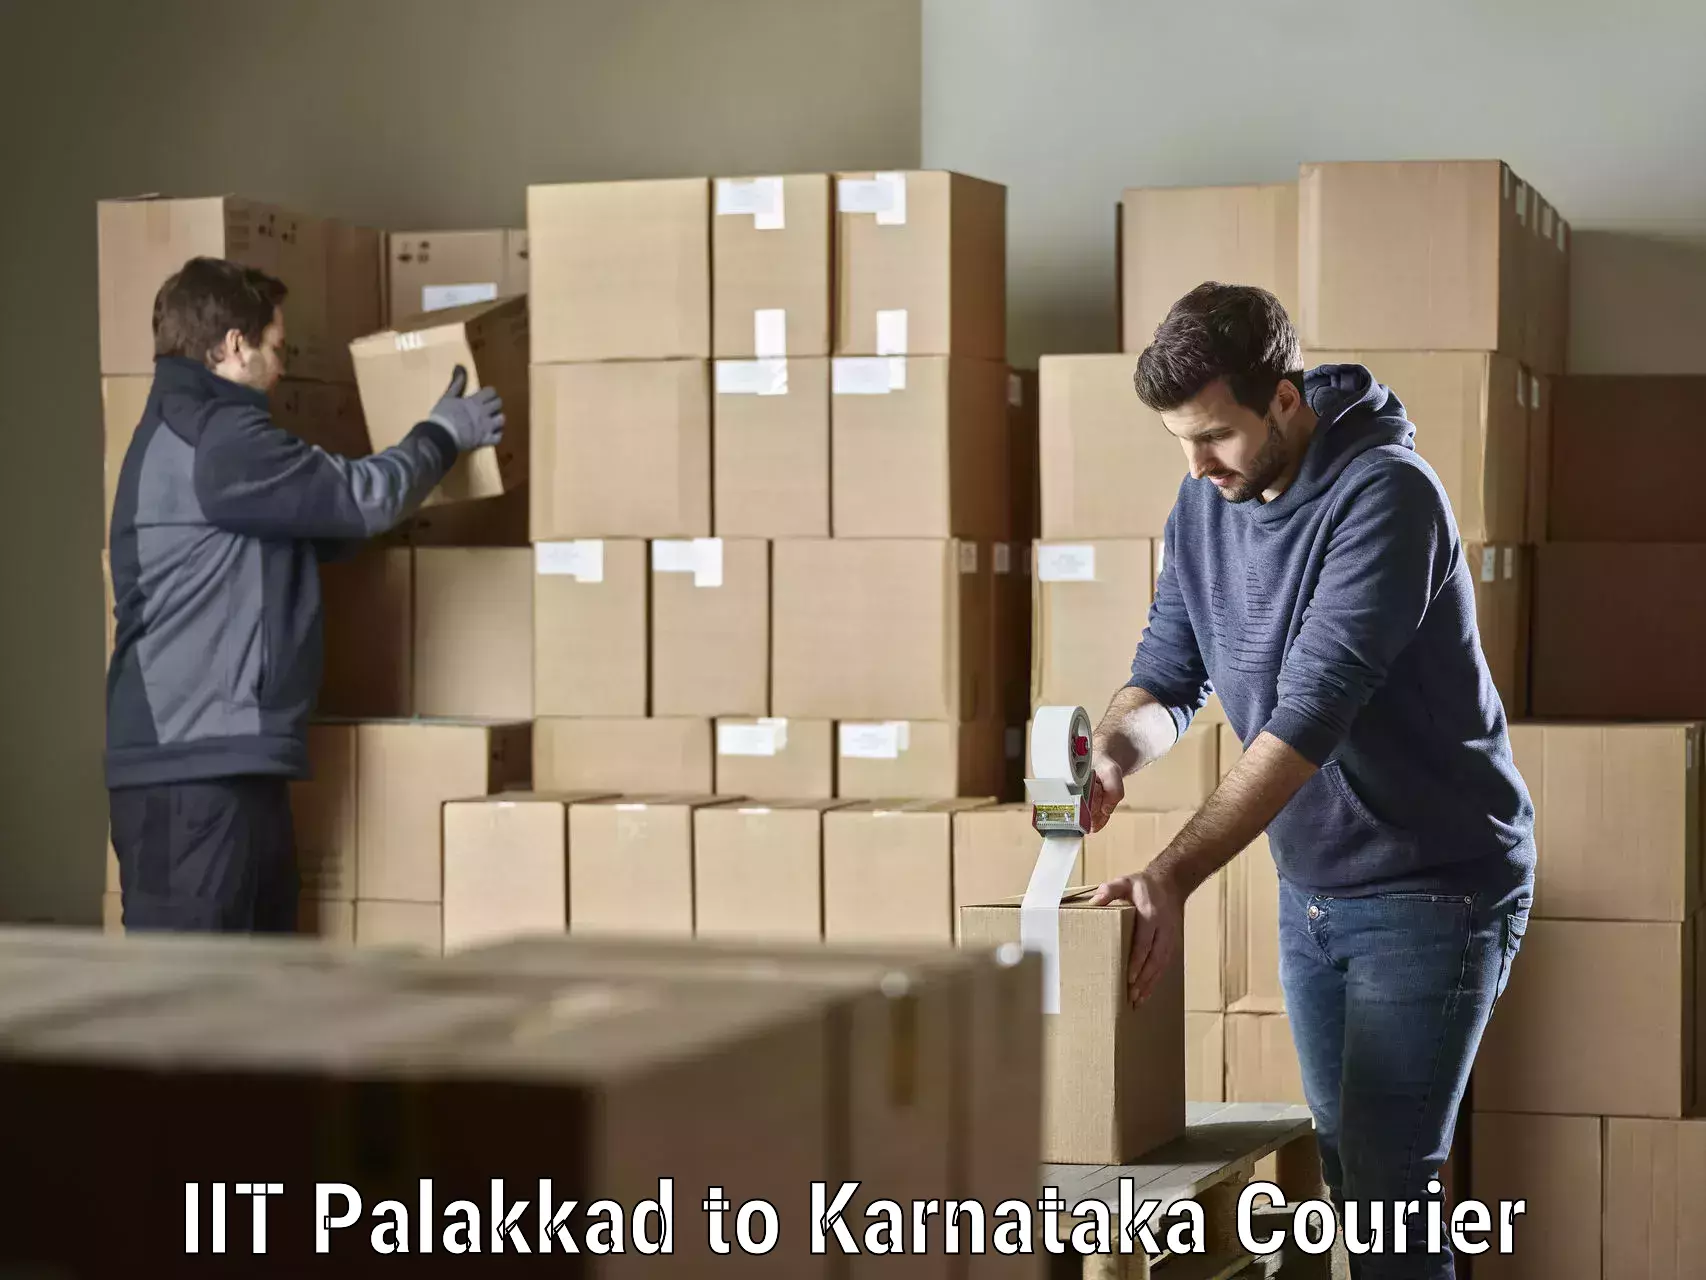 Doorstep delivery service in IIT Palakkad to Kanjarakatte